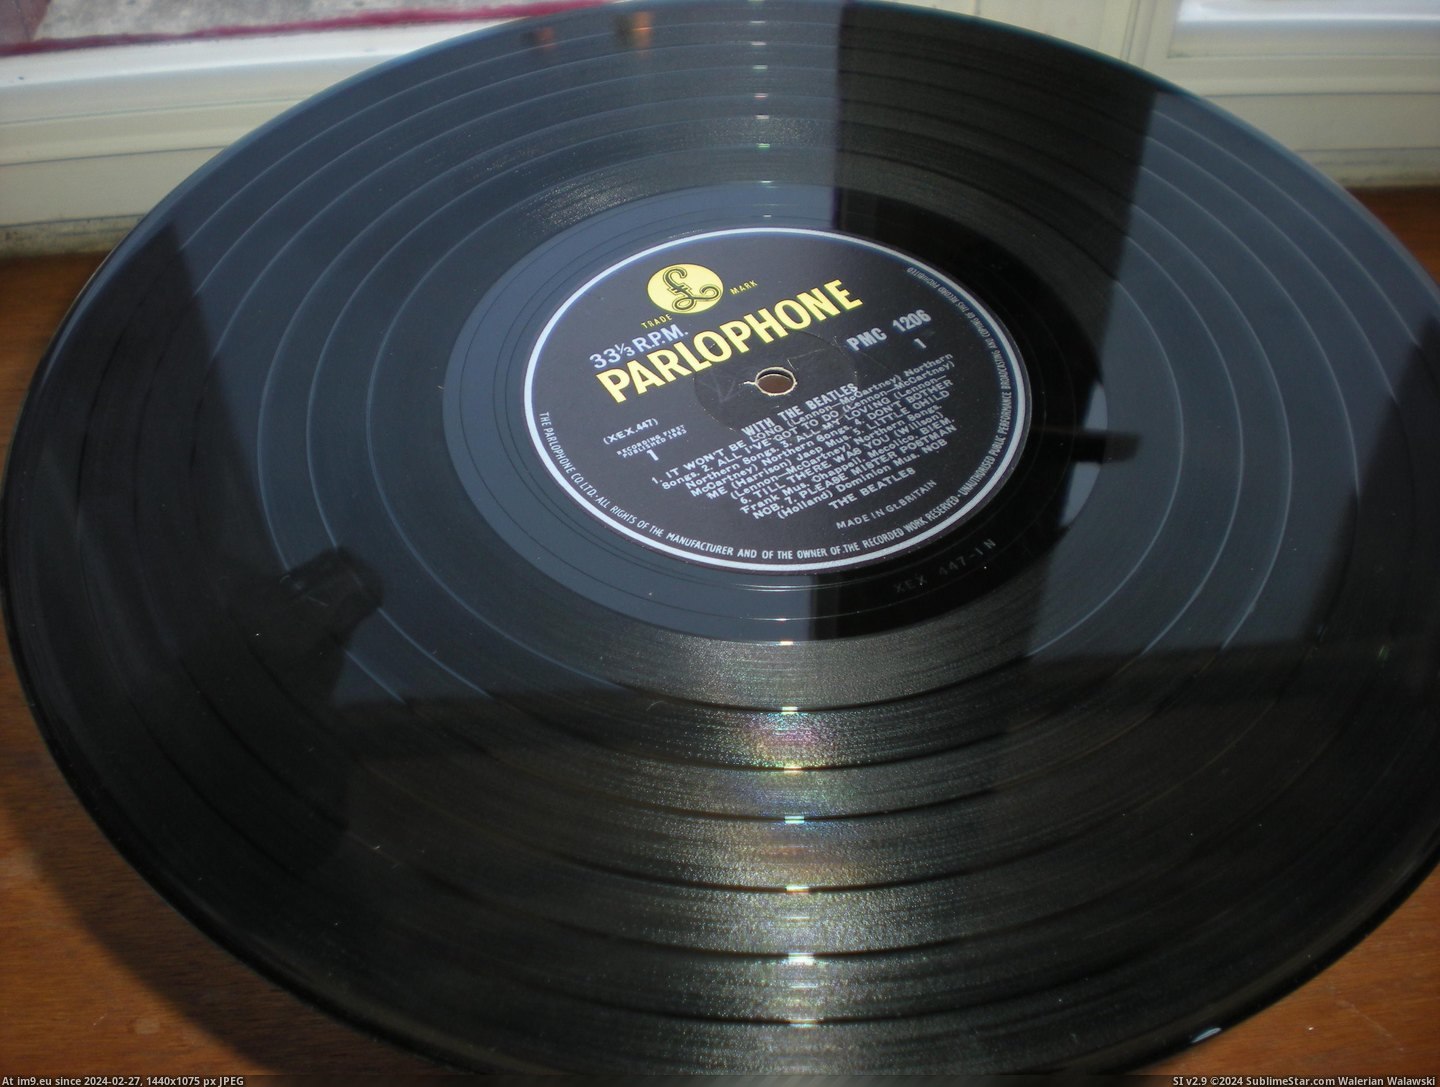 #Records #Vinyl #Record With The 22-8 2 Pic. (Obraz z album new 1))